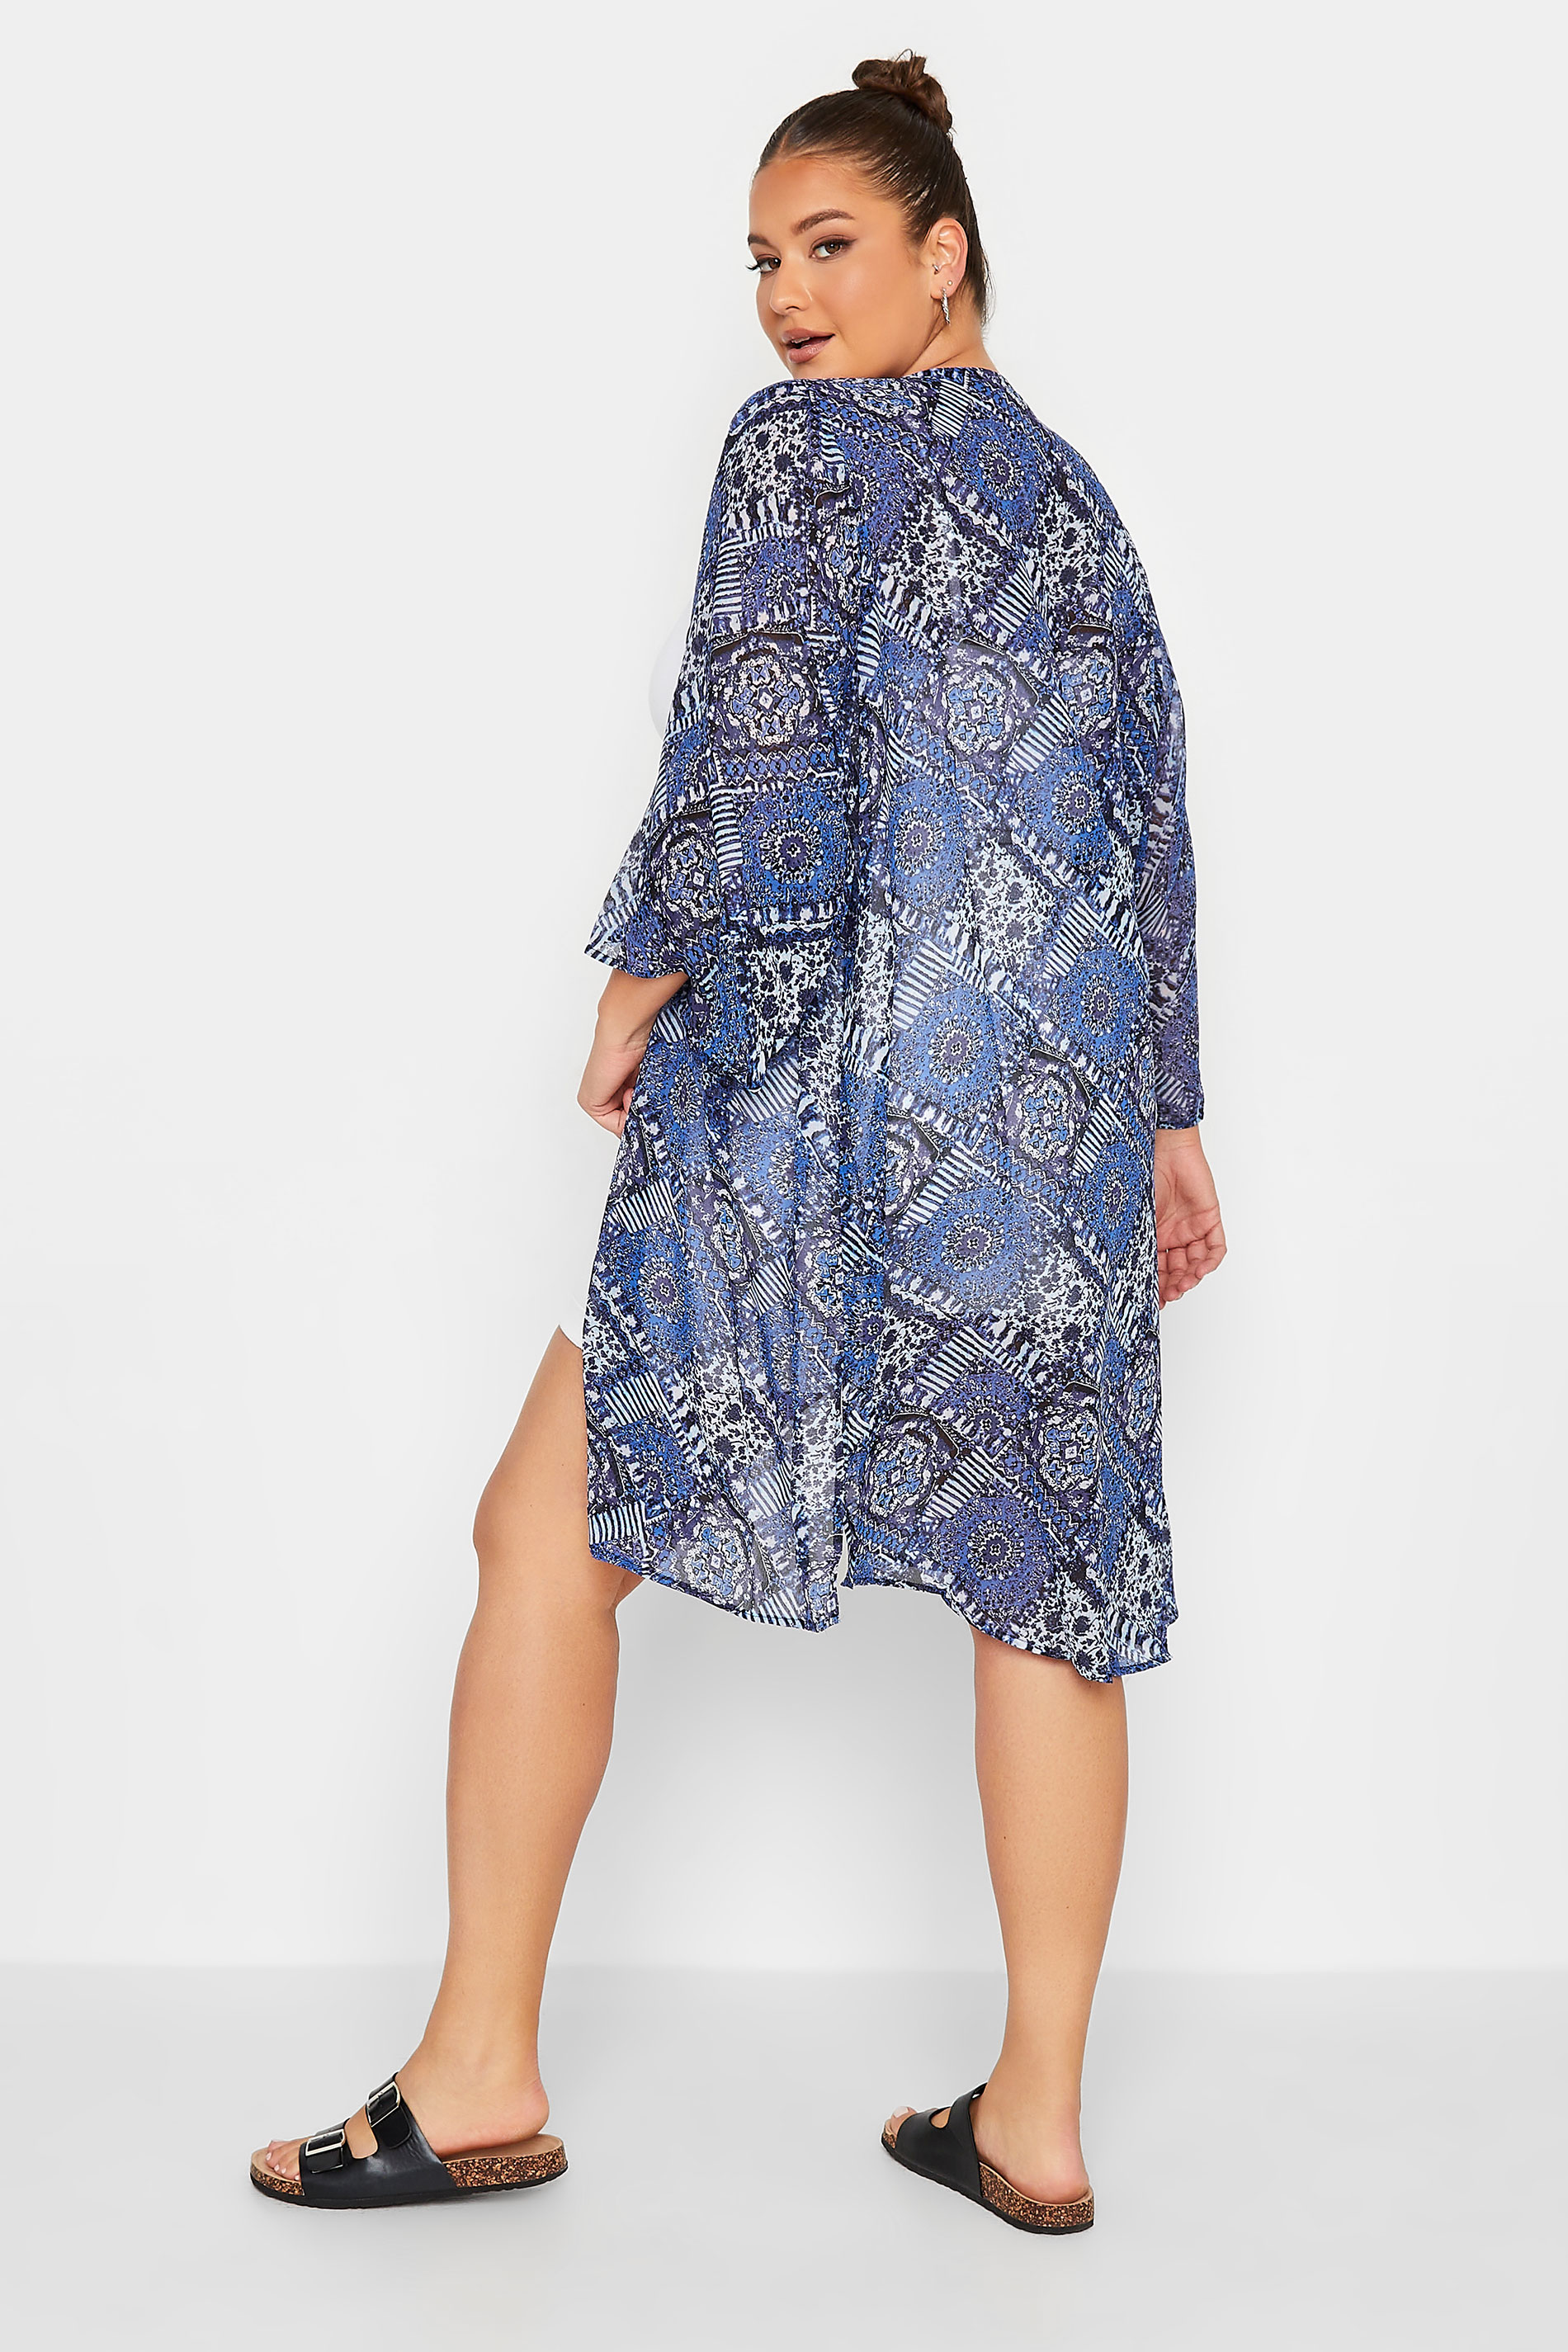 YOURS Curve Blue Tile Print Chiffon Kimono | Yours Clothing 3